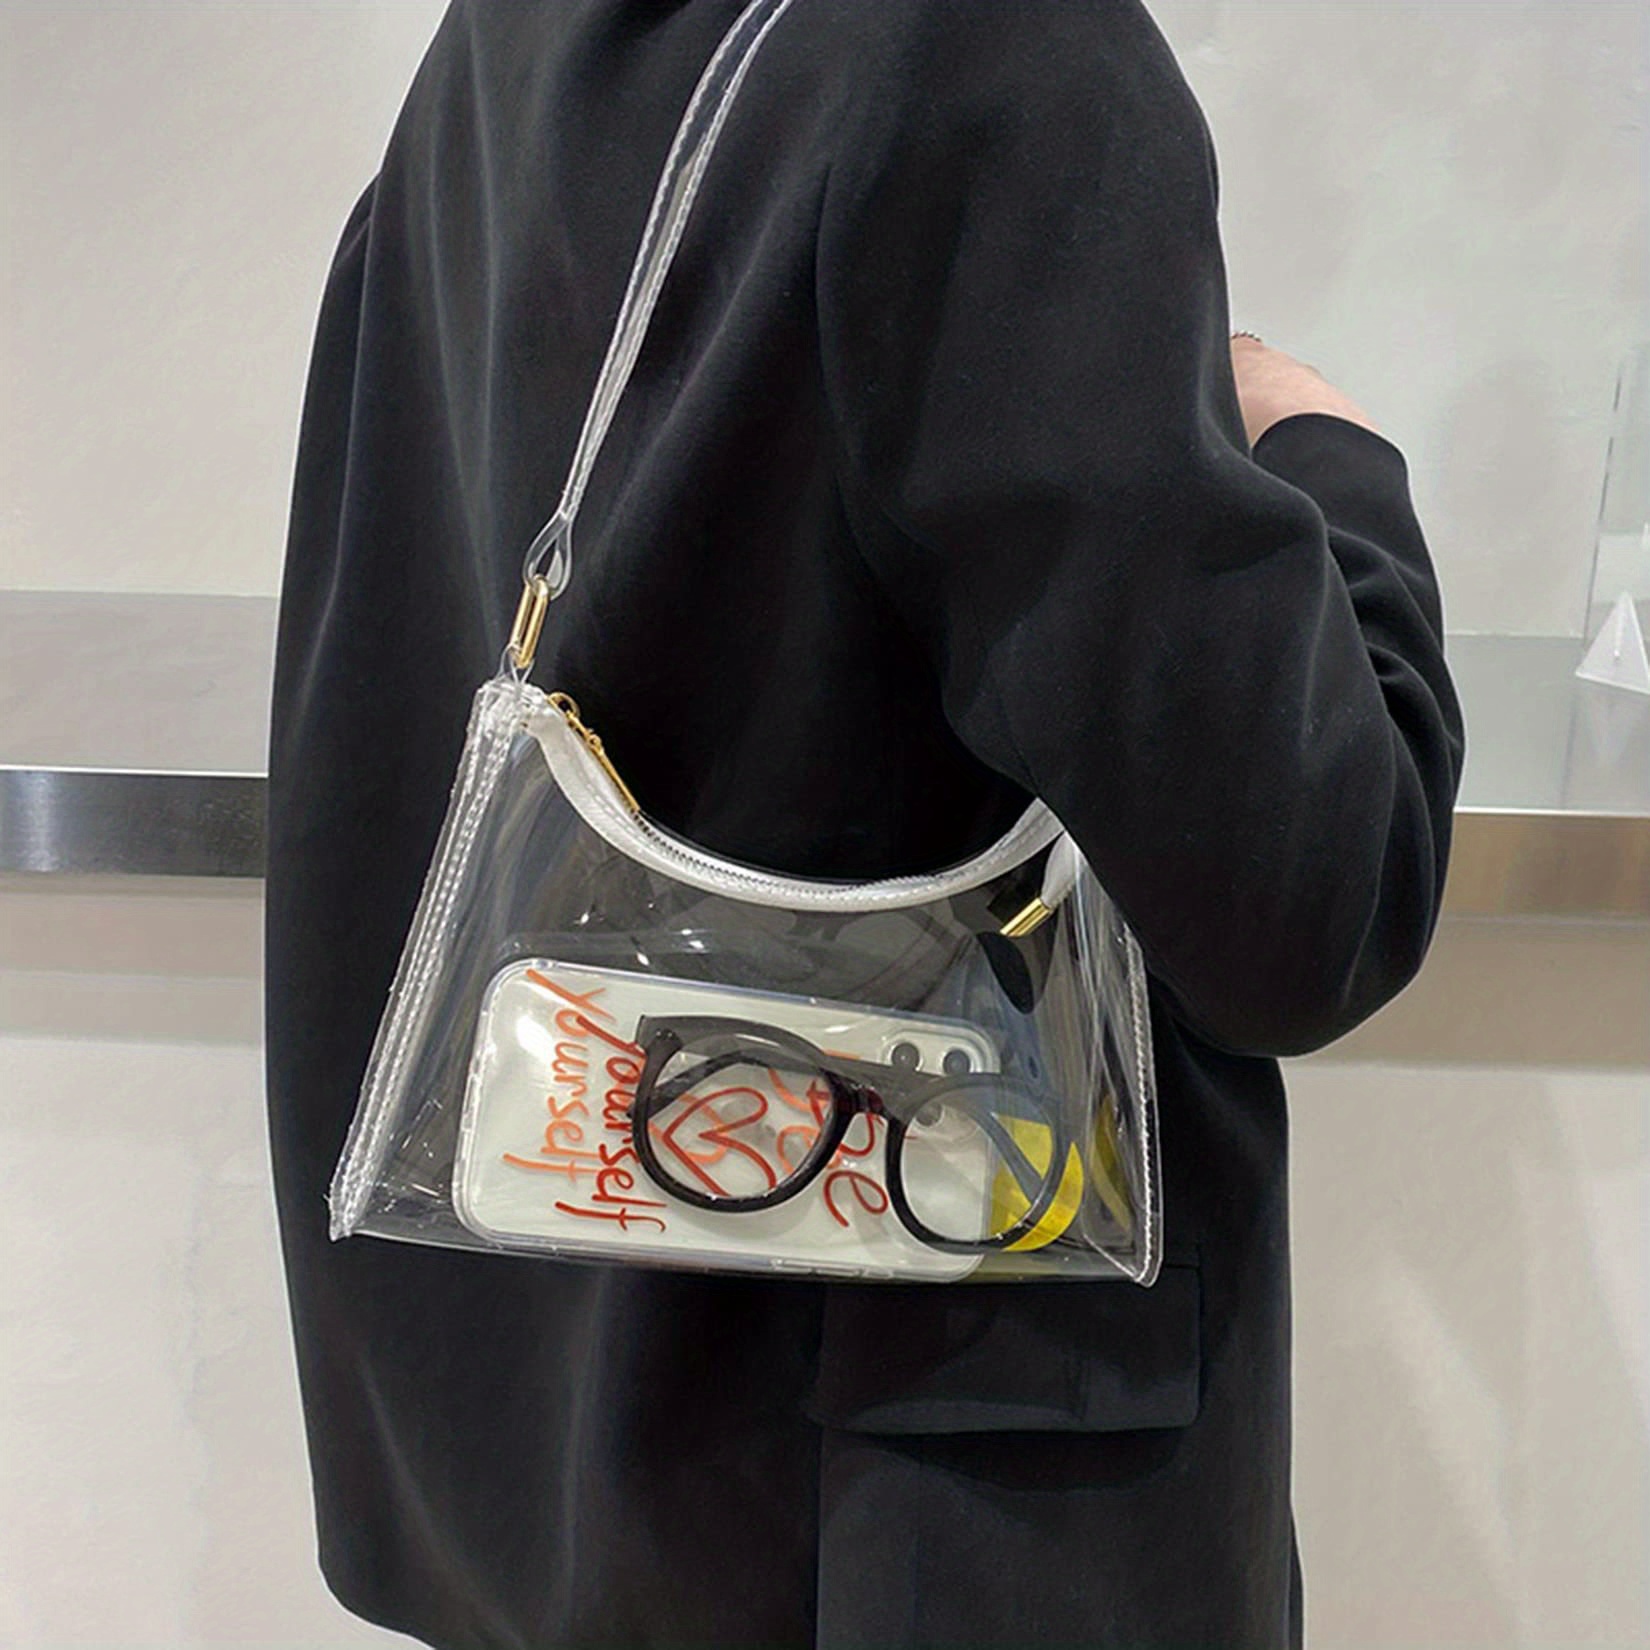 Clear Crossbody Bag Shoulder Handbag, Clear Purses For Women